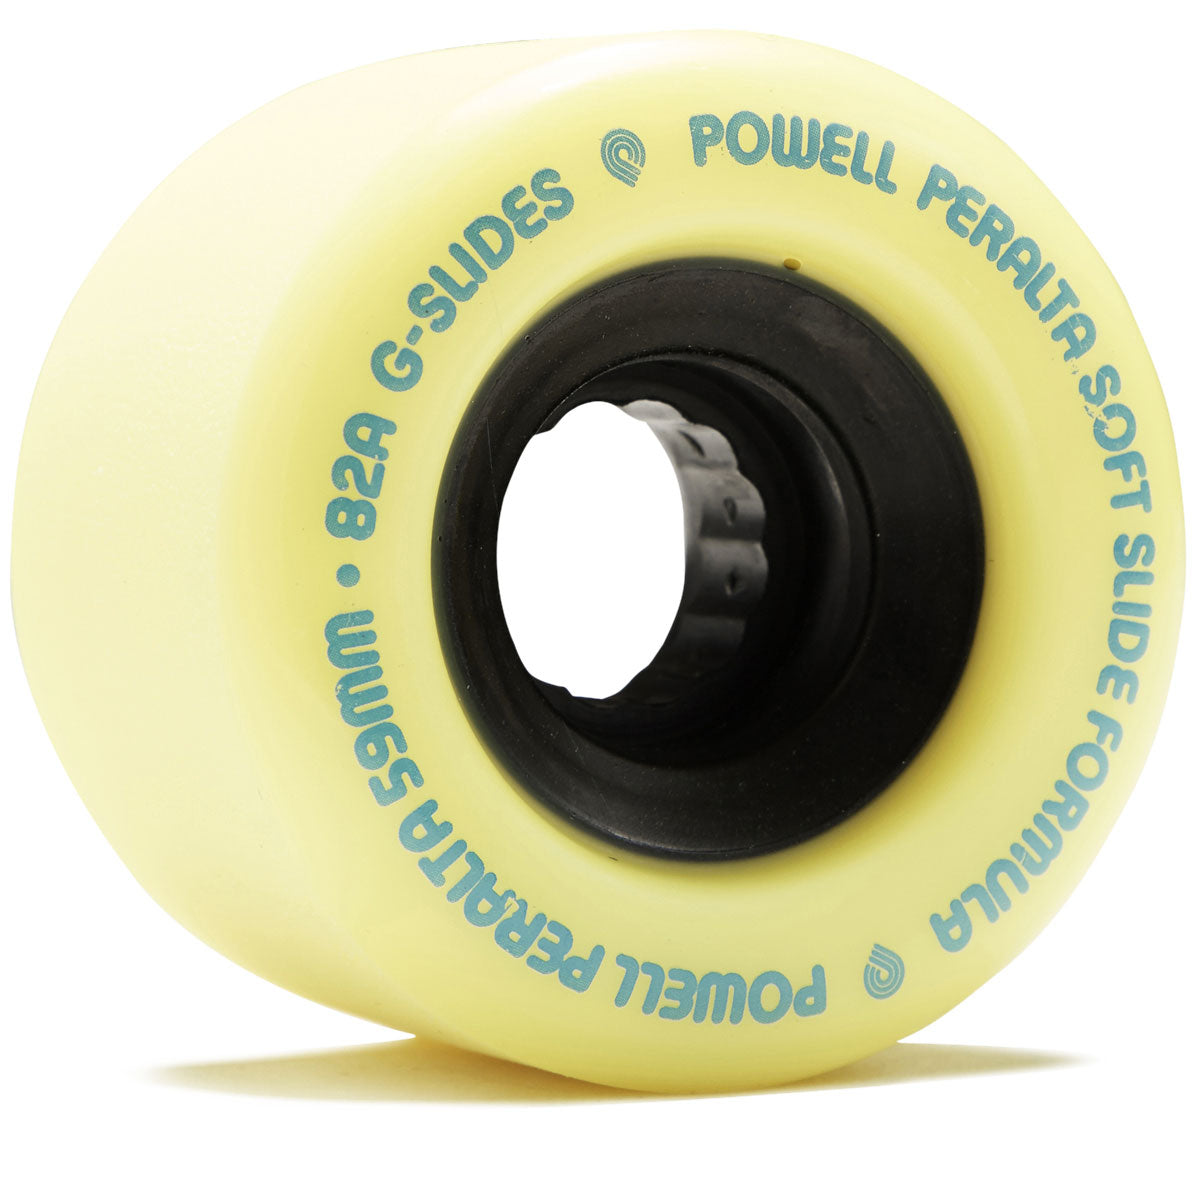 Powell-Peralta G-Slides 82A Longboard Wheels - Yellow - 59mm image 1